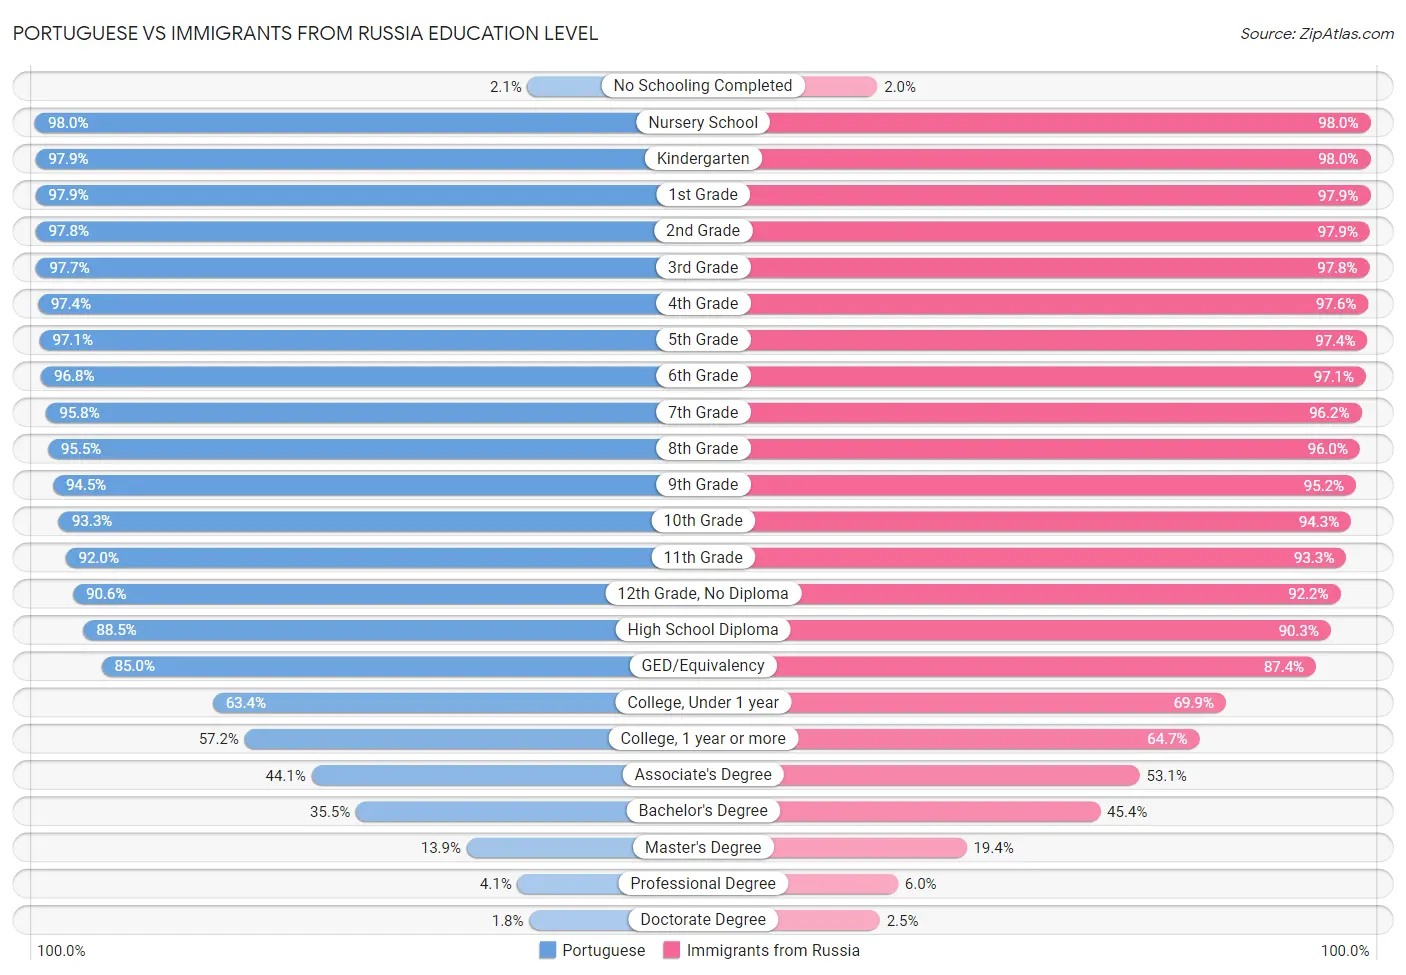 Portuguese vs Immigrants from Russia Education Level